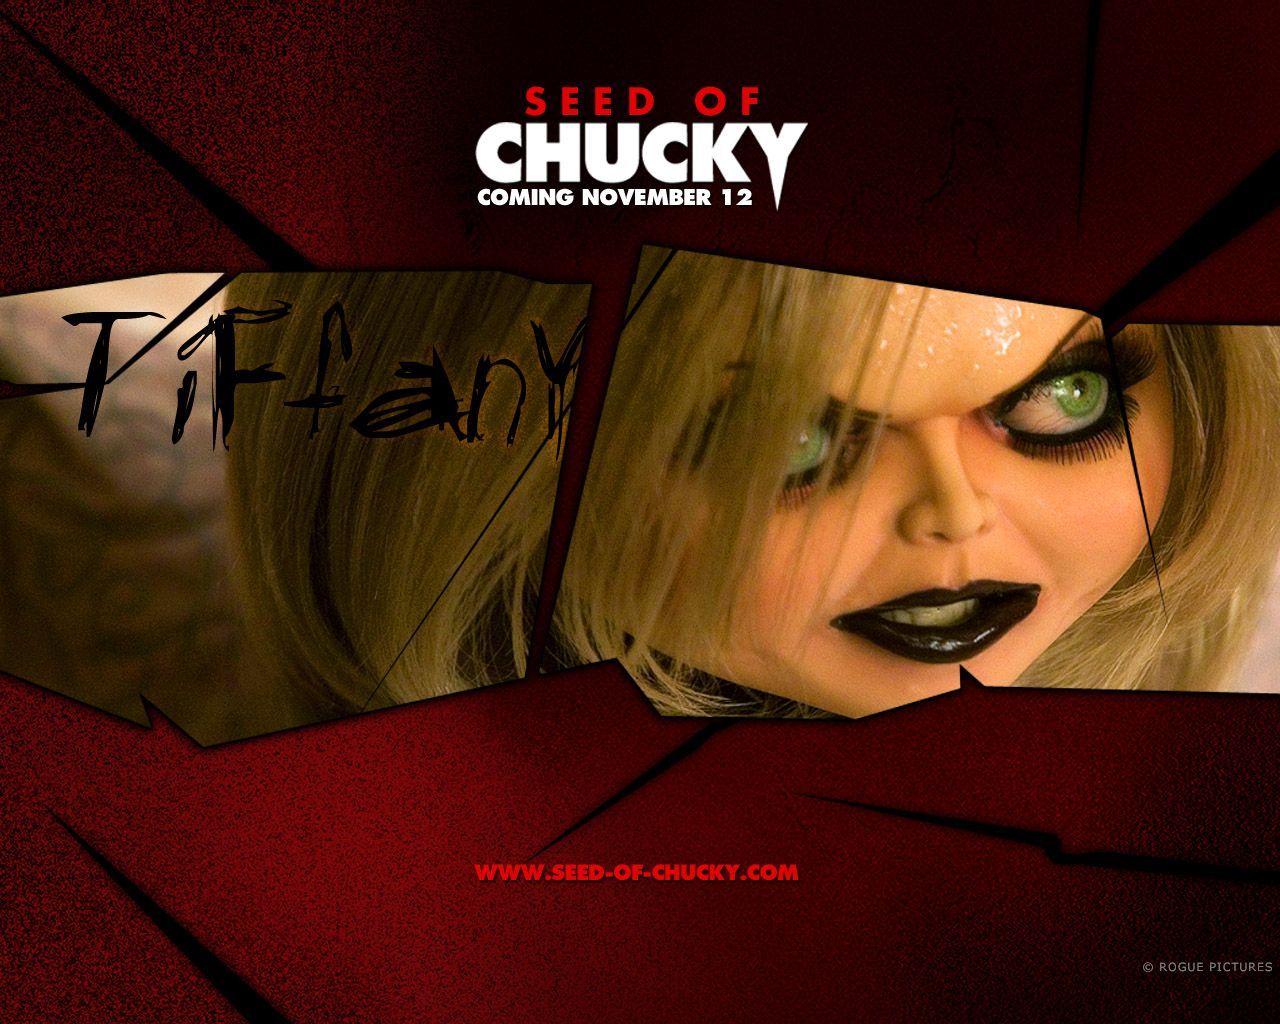 Seed of chucky. Tiffany bride of chucky, Chucky movies, Bride of chucky